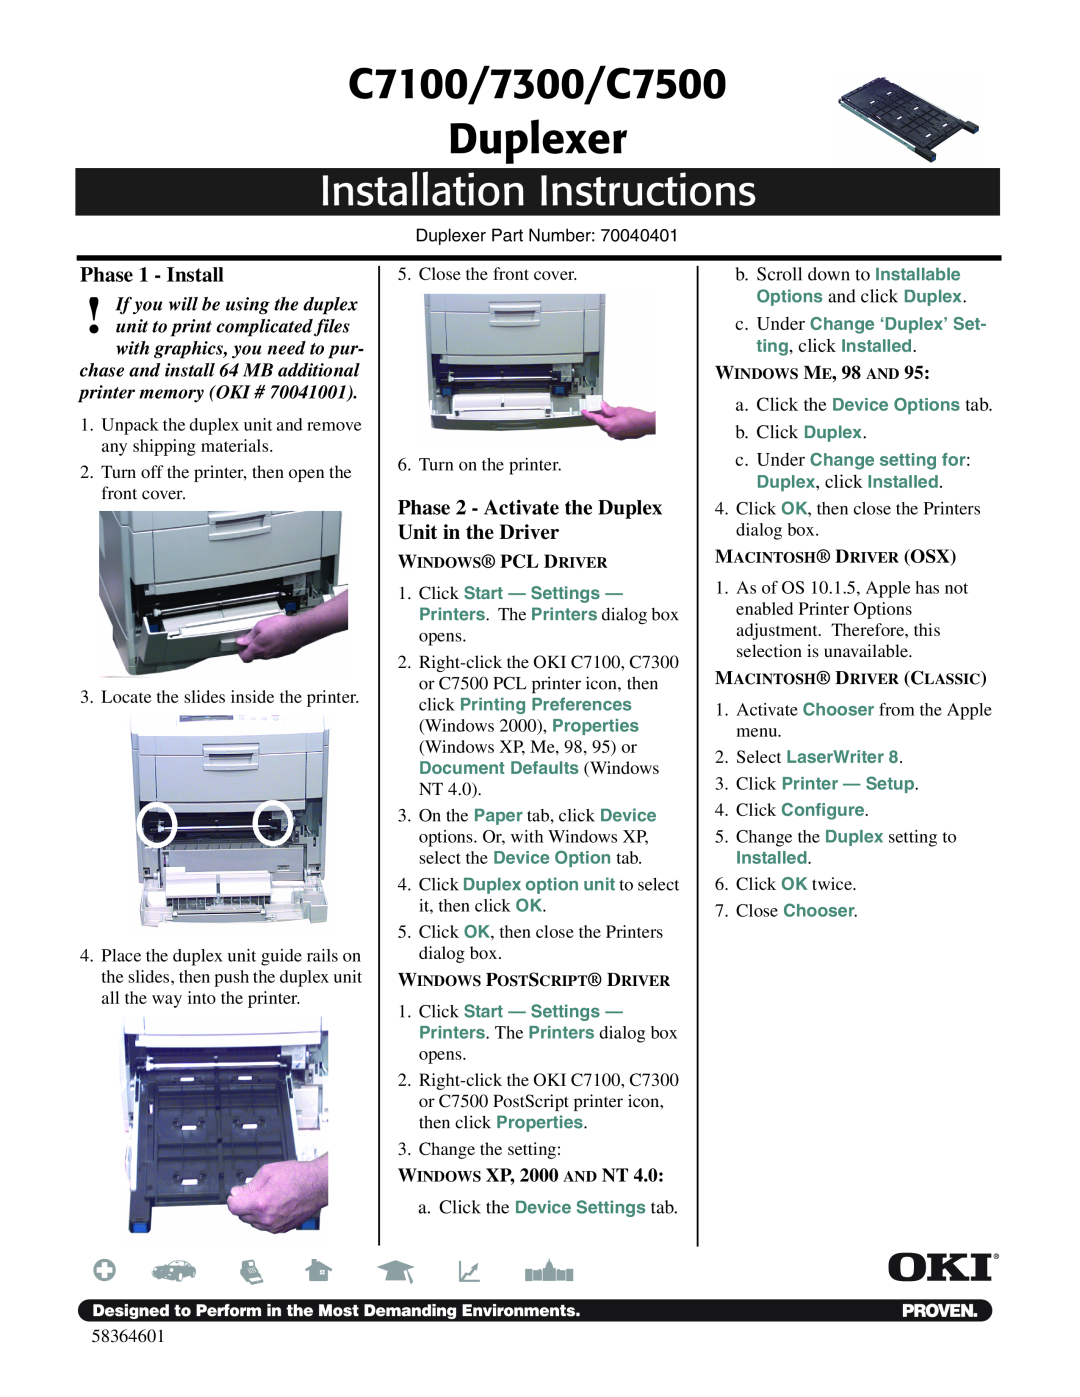 Oki installation instructions C7100/7300/C7500 Duplexer, Phase 1 - Install, WINDOWS XP, 2000 AND NT, b.Click Duplex 